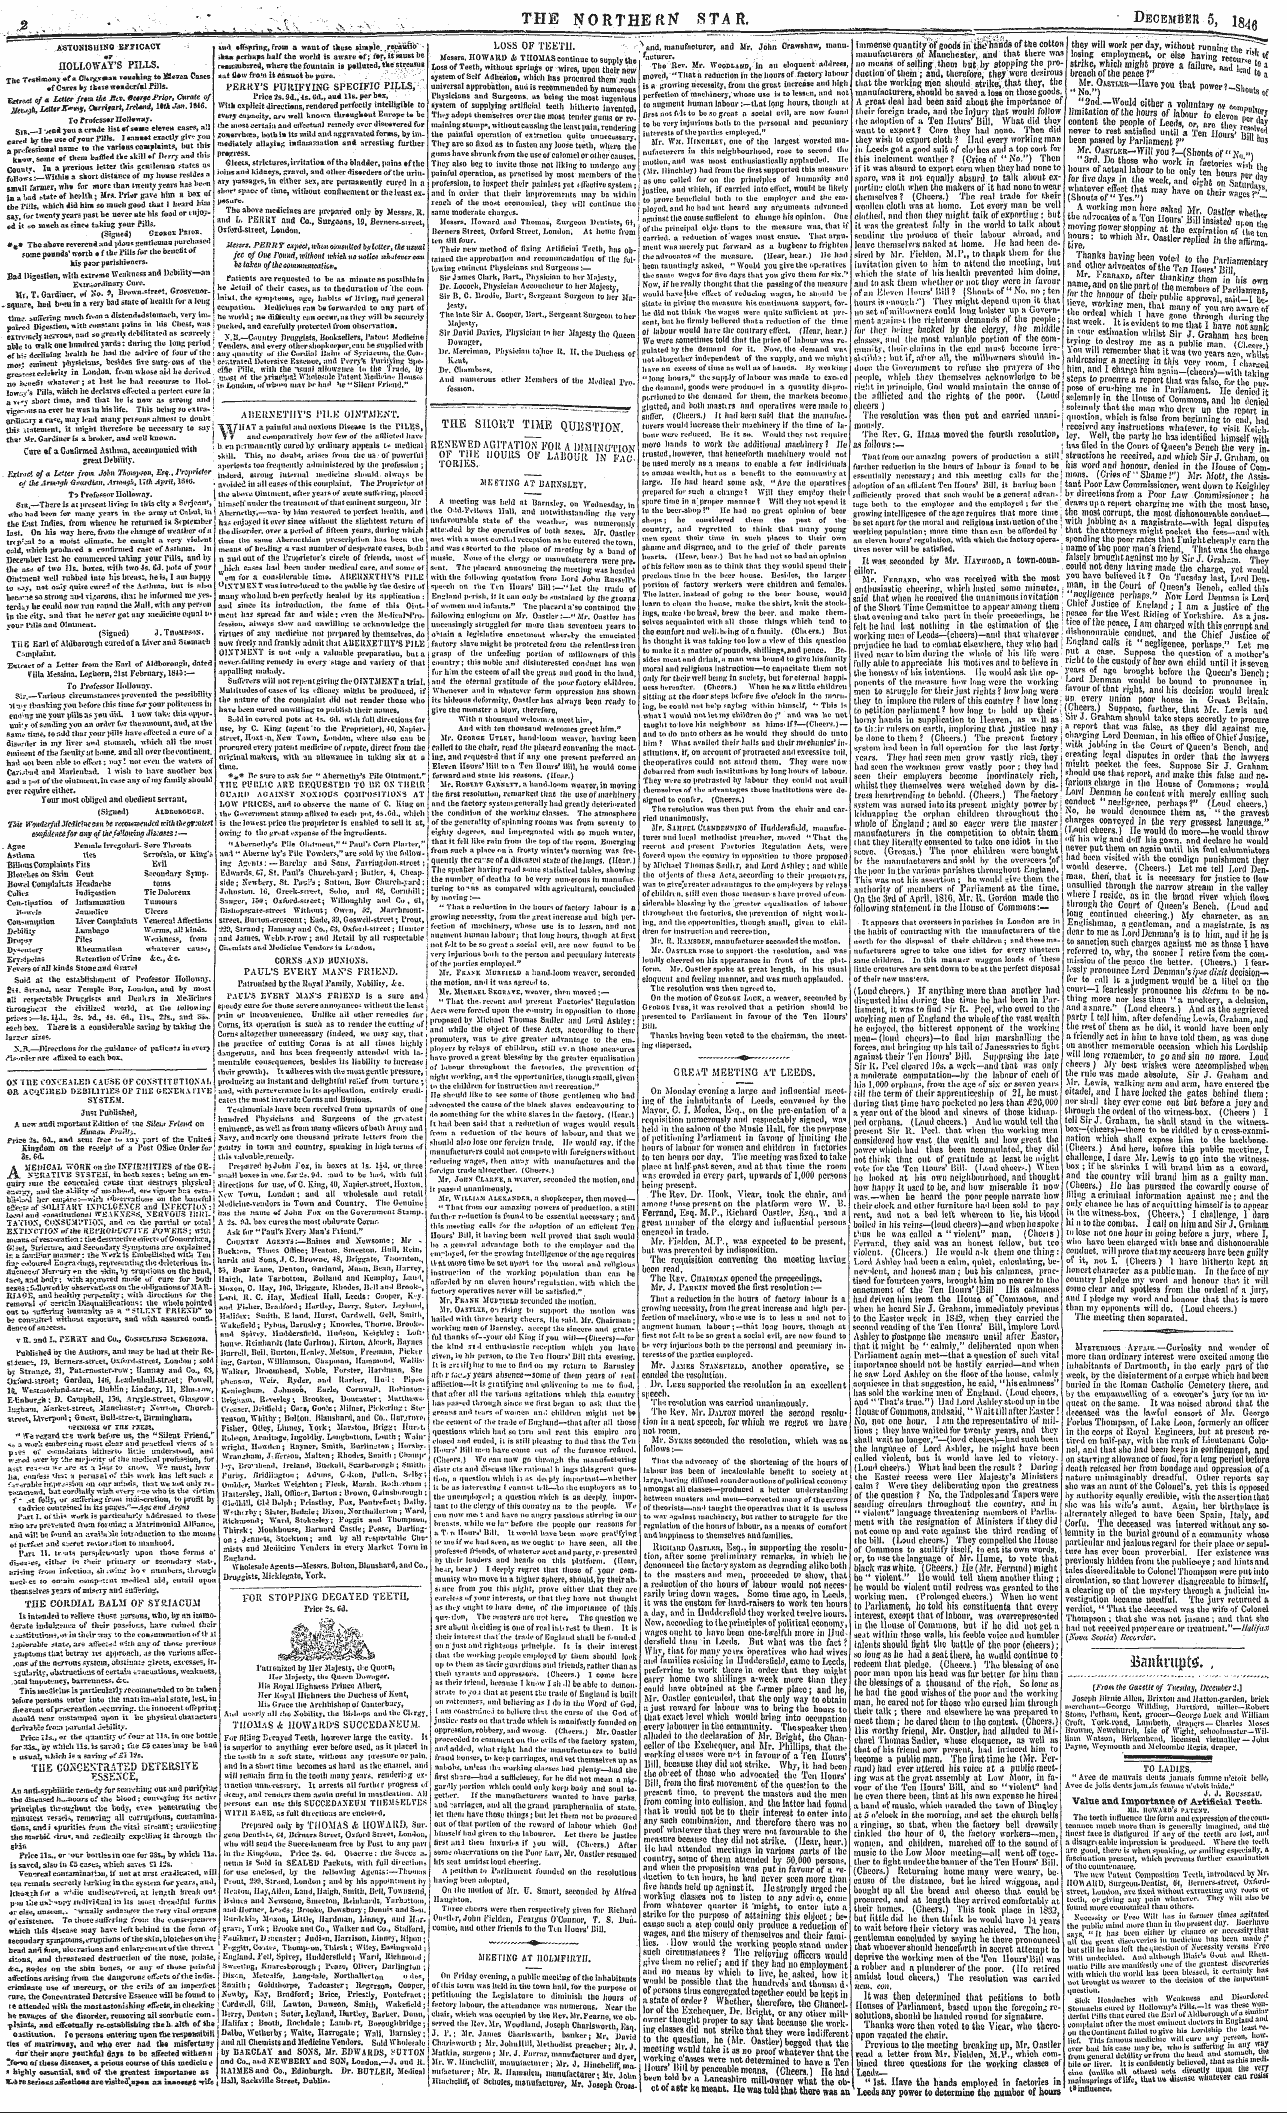 Northern Star (1837-1852): jS F Y, 3rd edition - To Ladies. "Avec Dc Mauvais Dents Jamais...